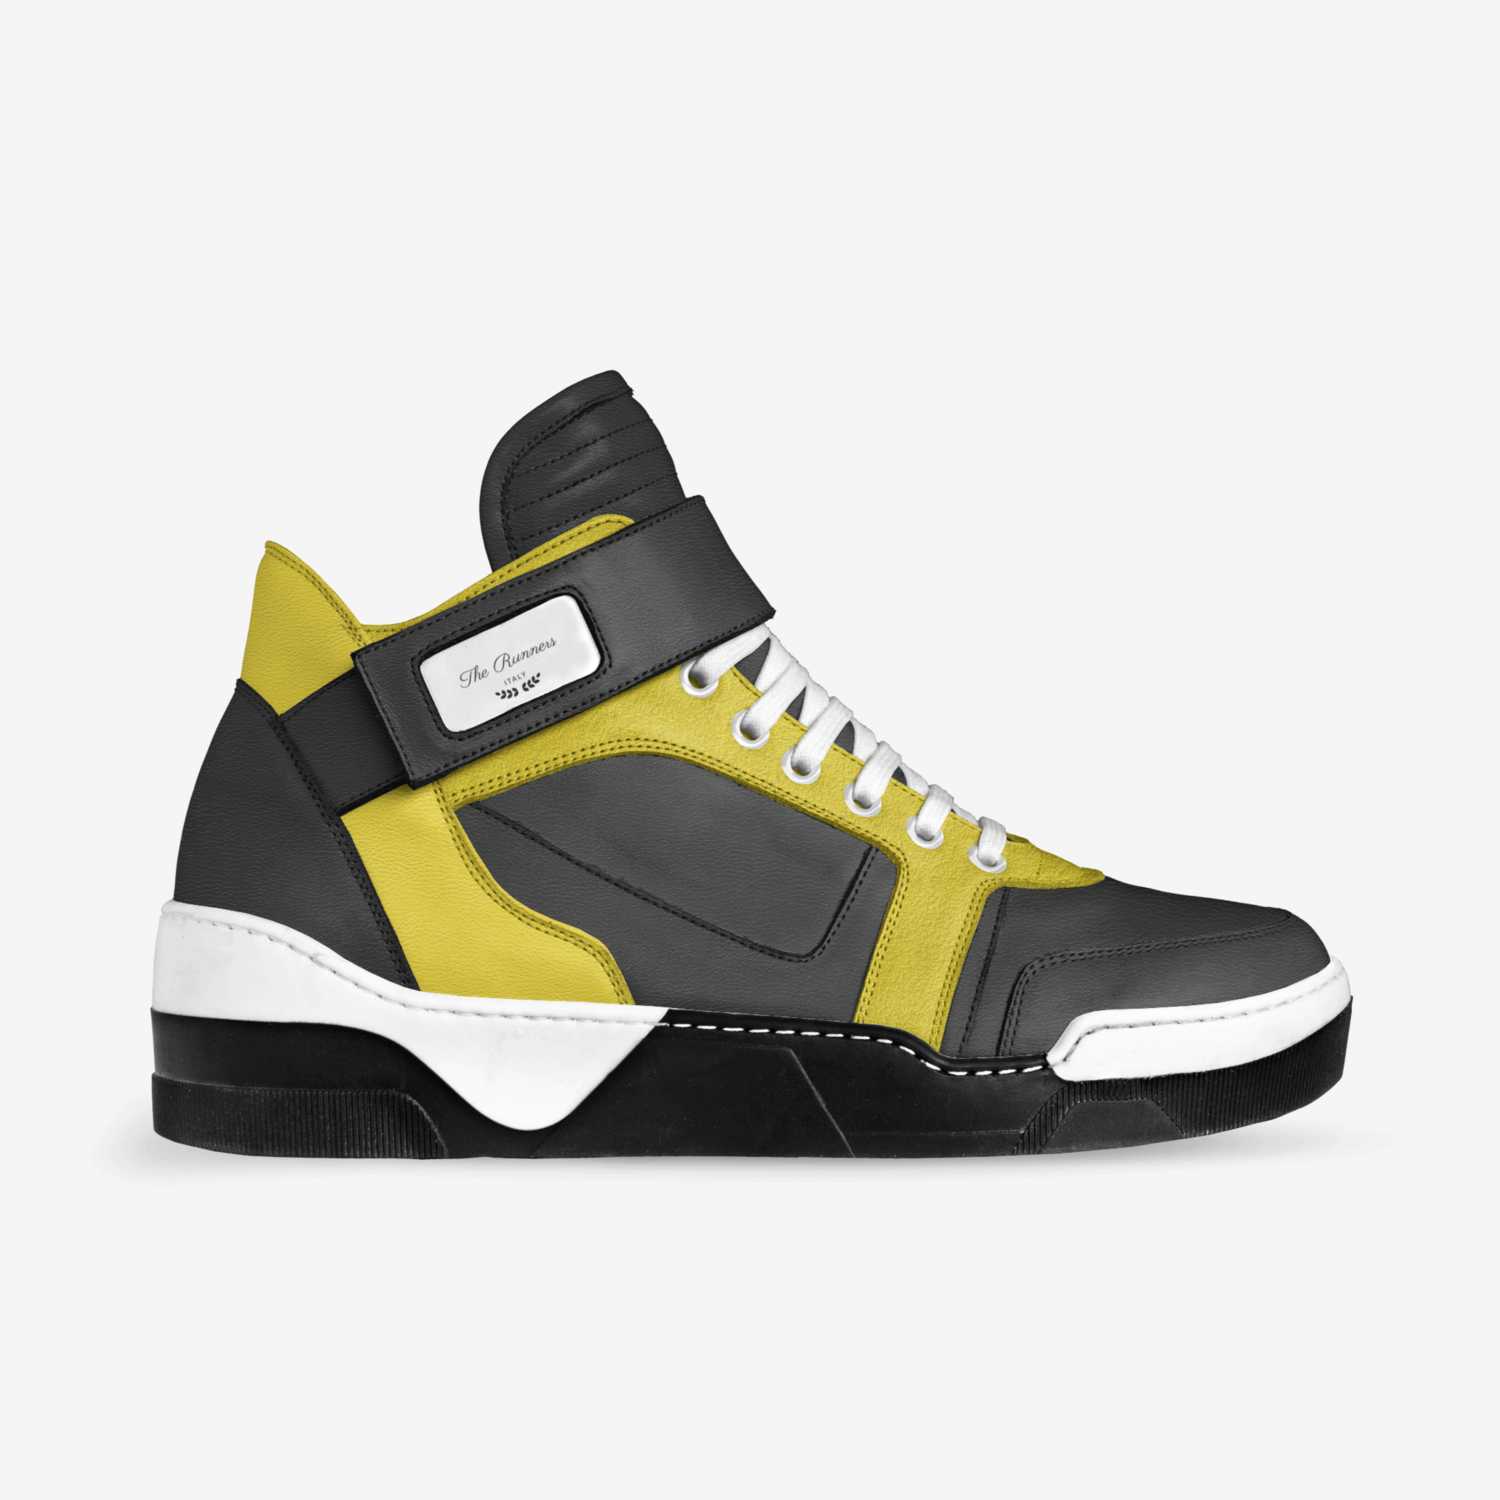 JayJigga custom made in Italy shoes by Jermaine Marignay | Side view